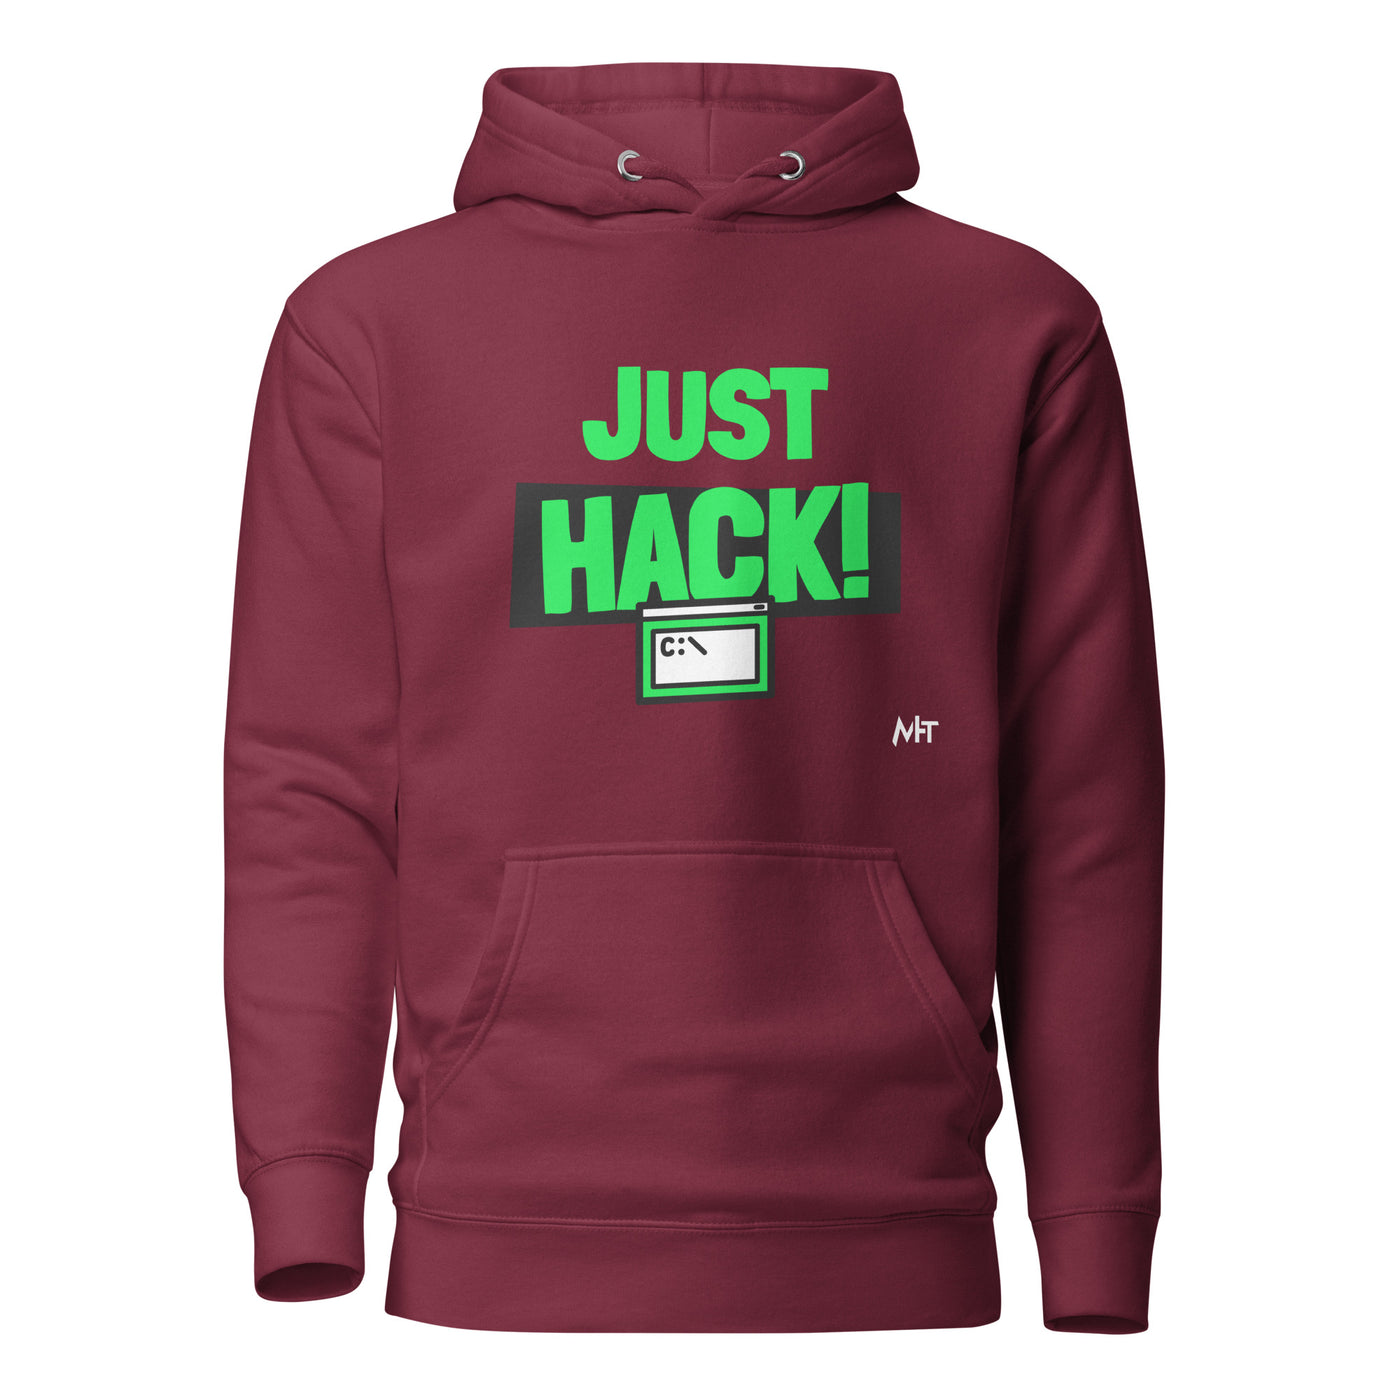 Just Hack (Green text) - Unisex Hoodie